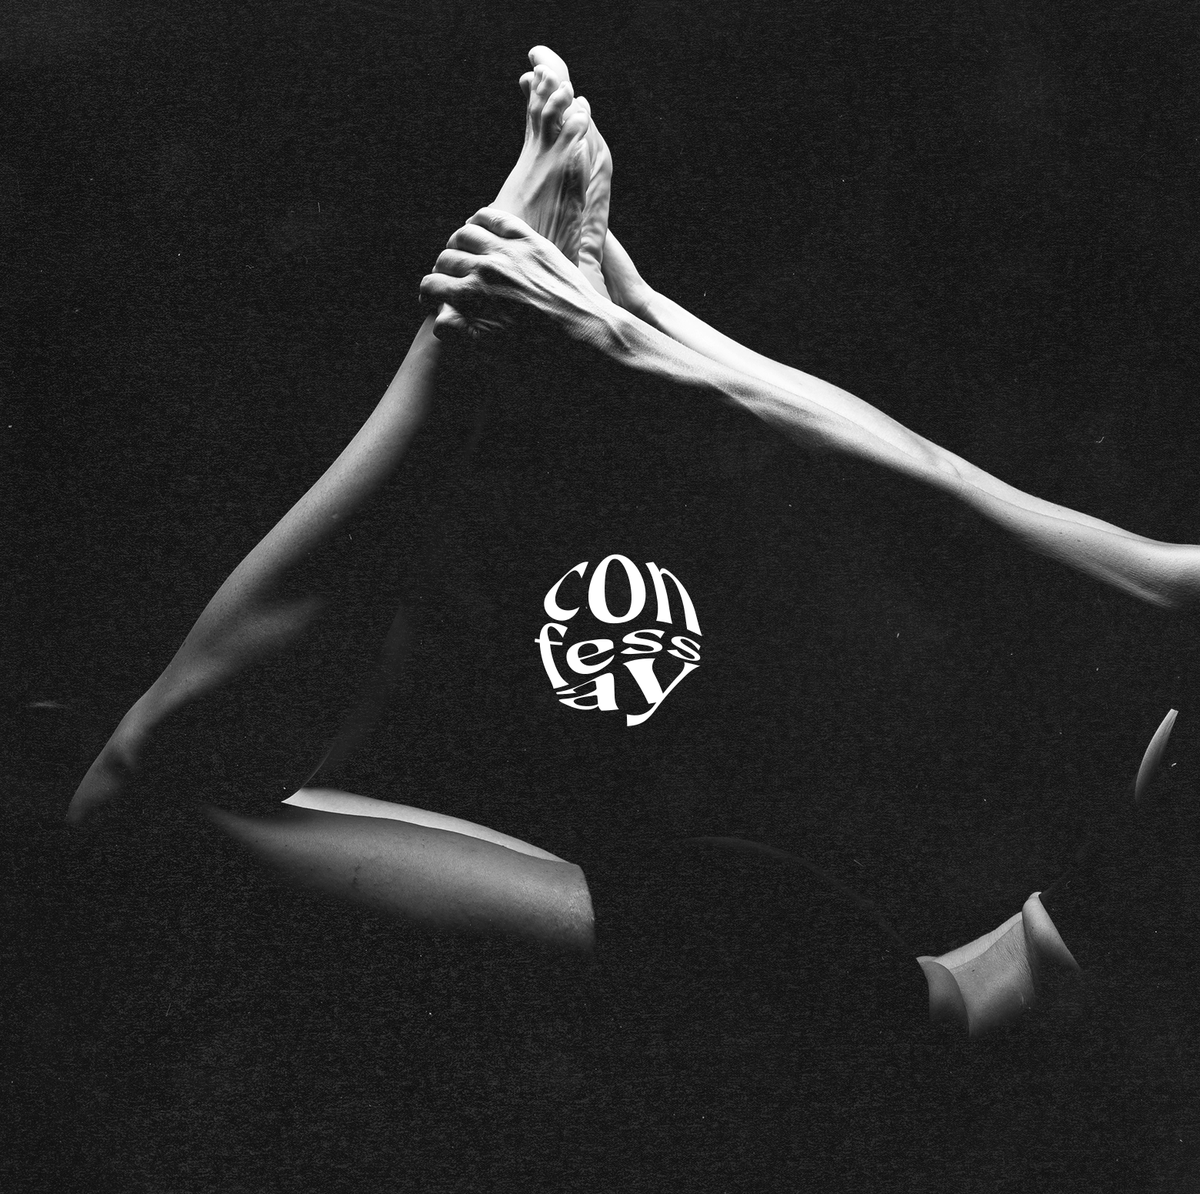 woman holding a yoga pose